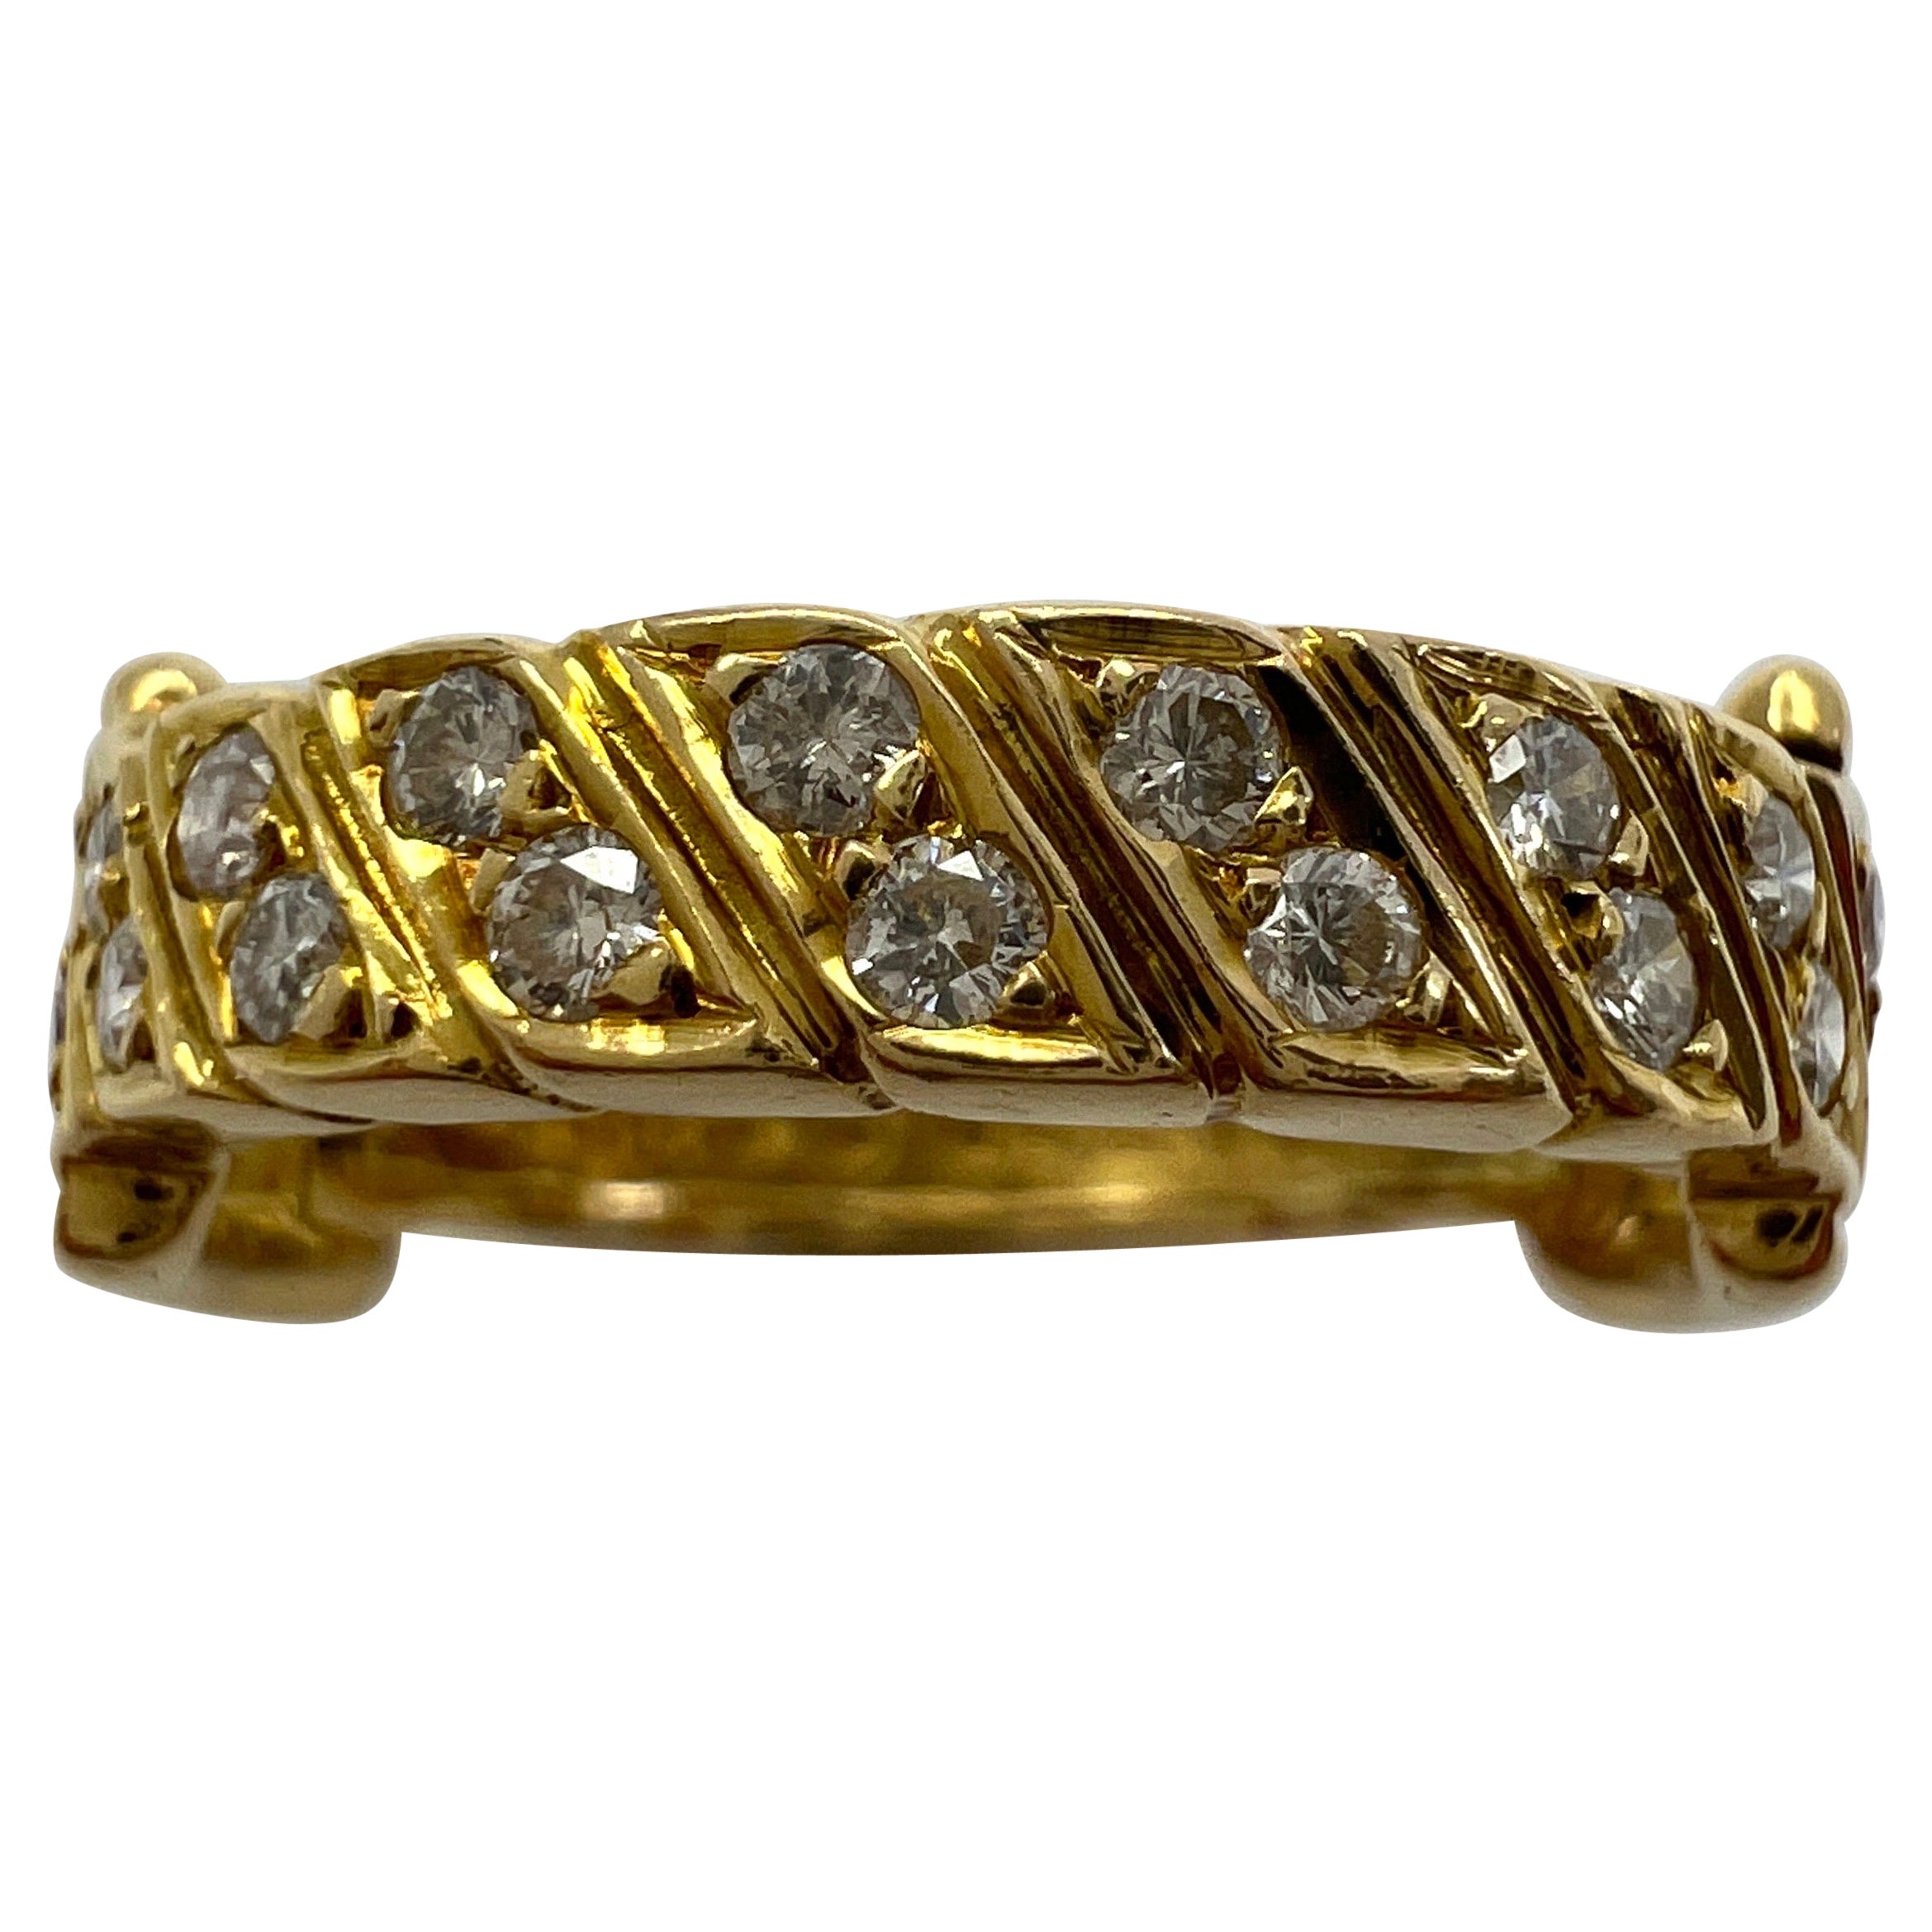 Very Rare Vintage Van Cleef & Arpels 18k Yellow Gold Diamond Buckle Band Ring